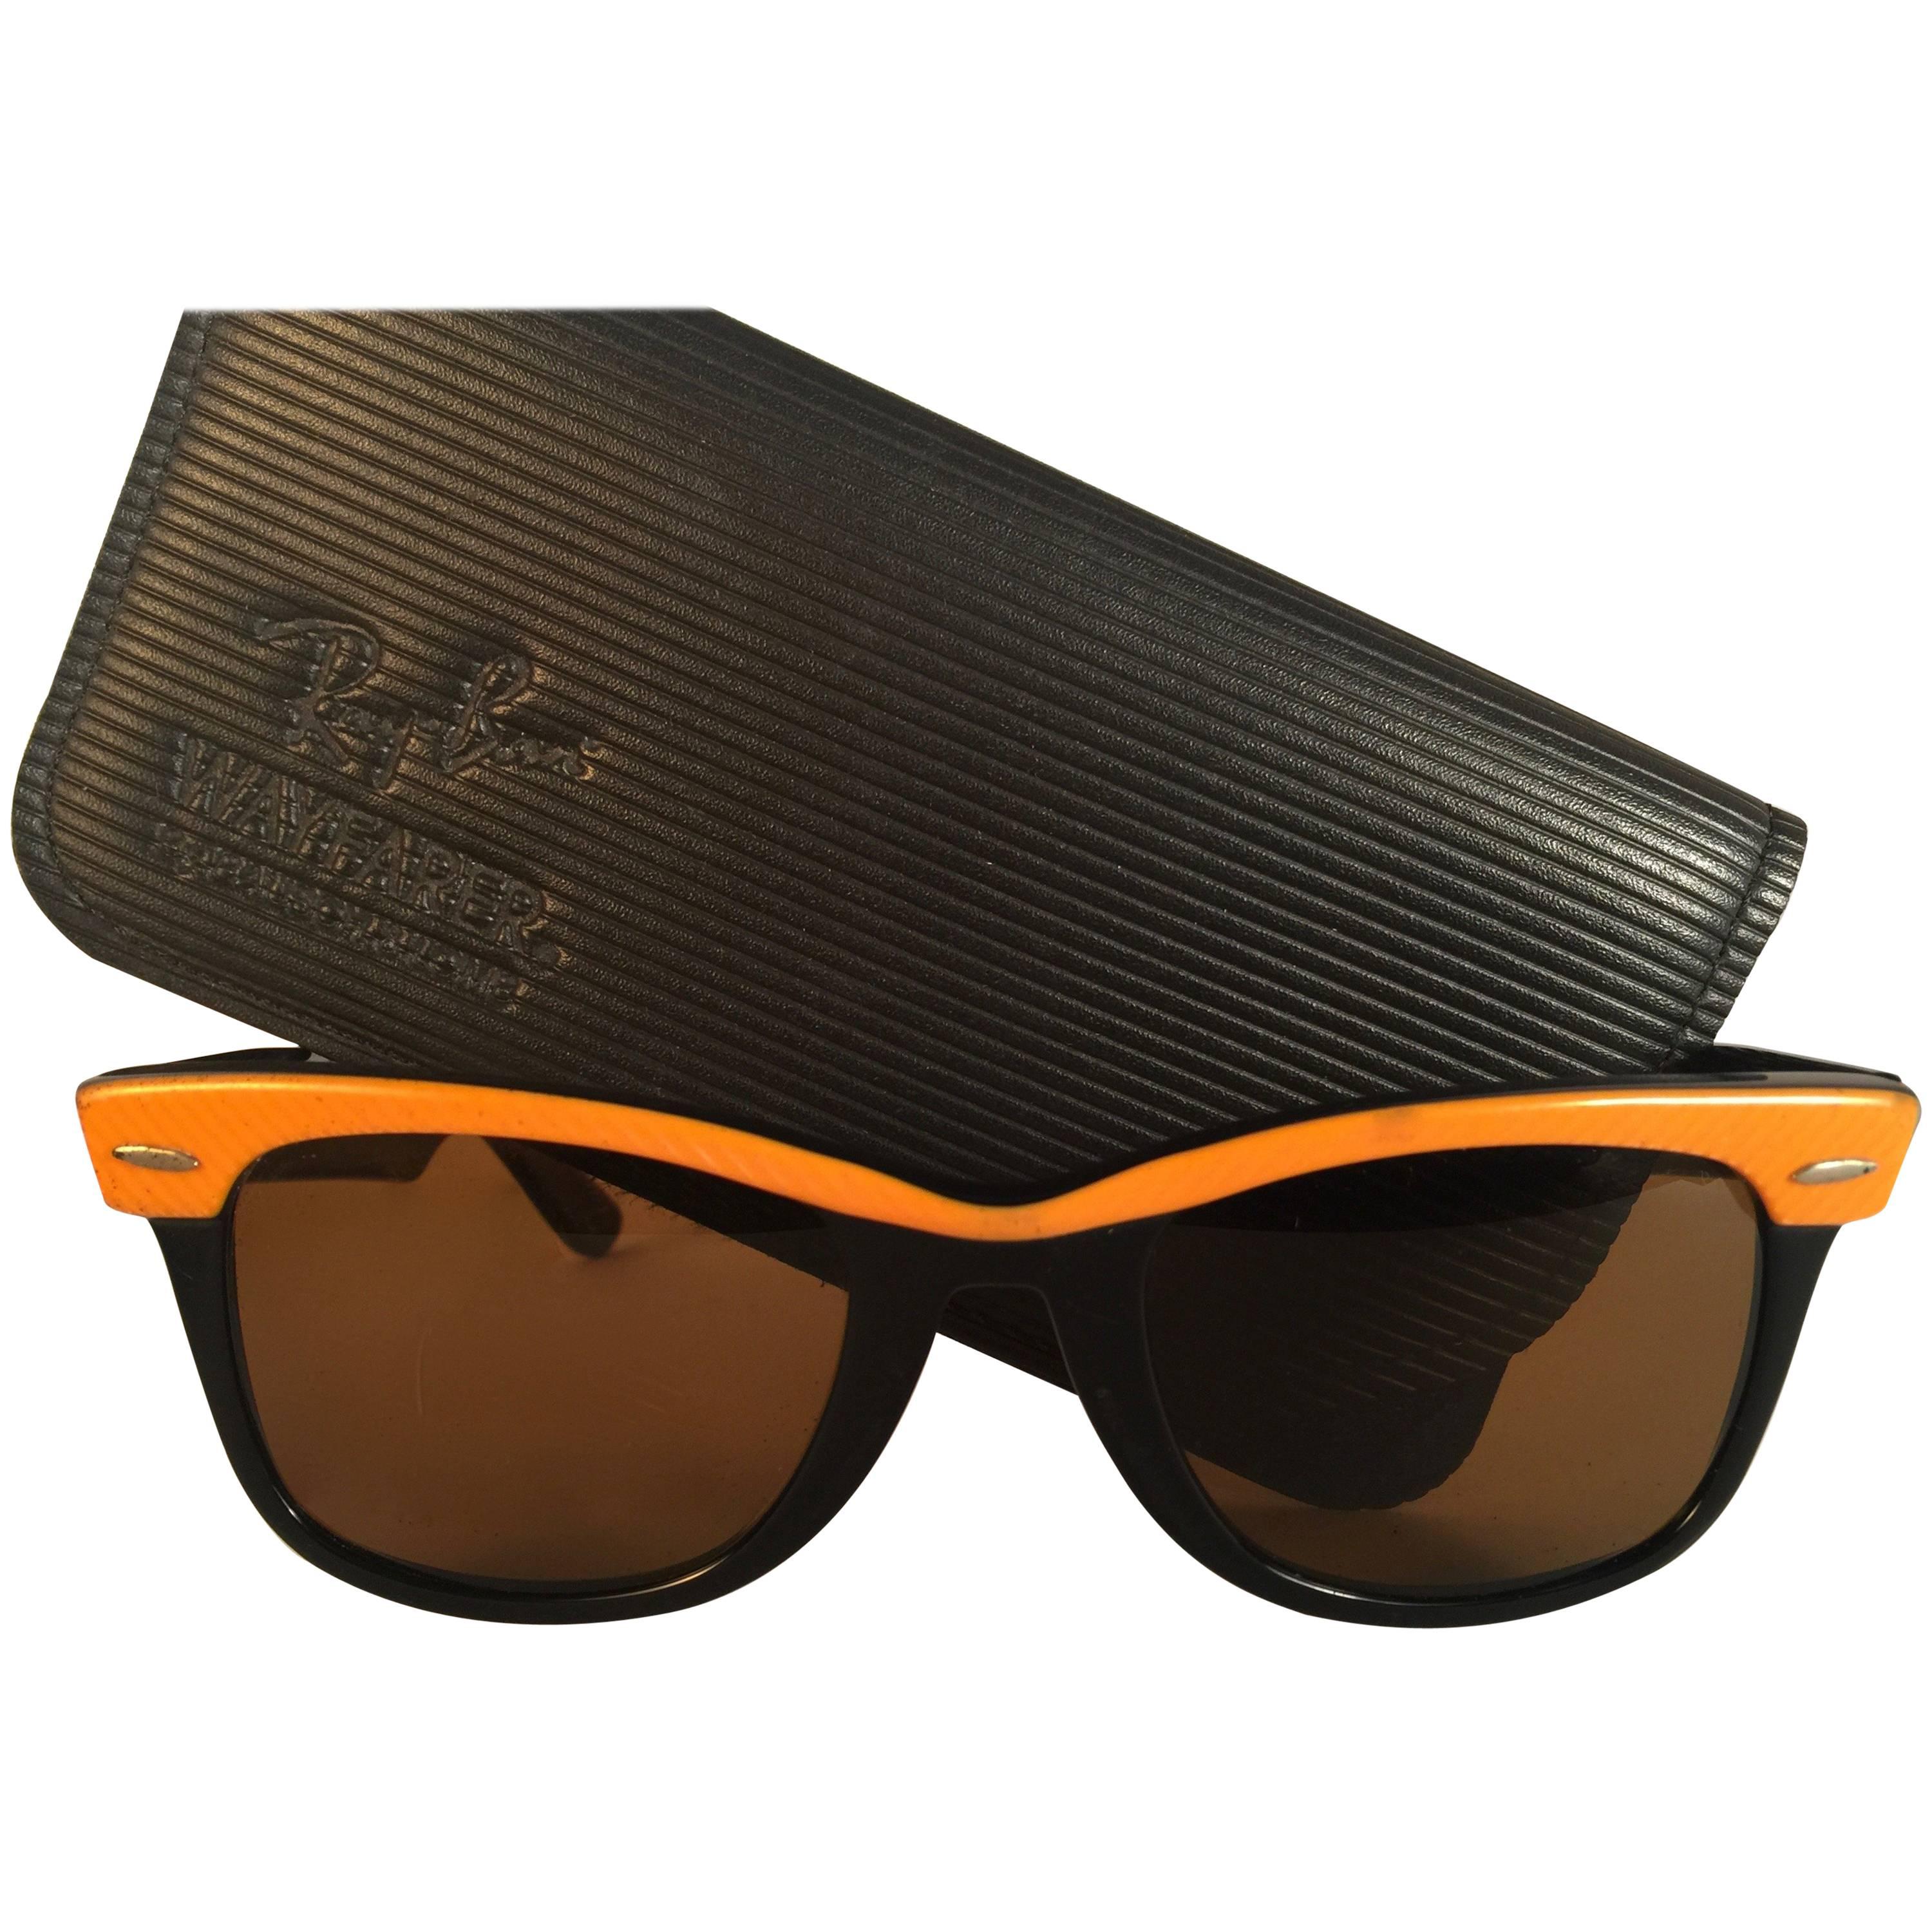 New Ray Ban The Wayfarer Two Tone Orange G15 Grey Lenses USA 80's Sunglasses